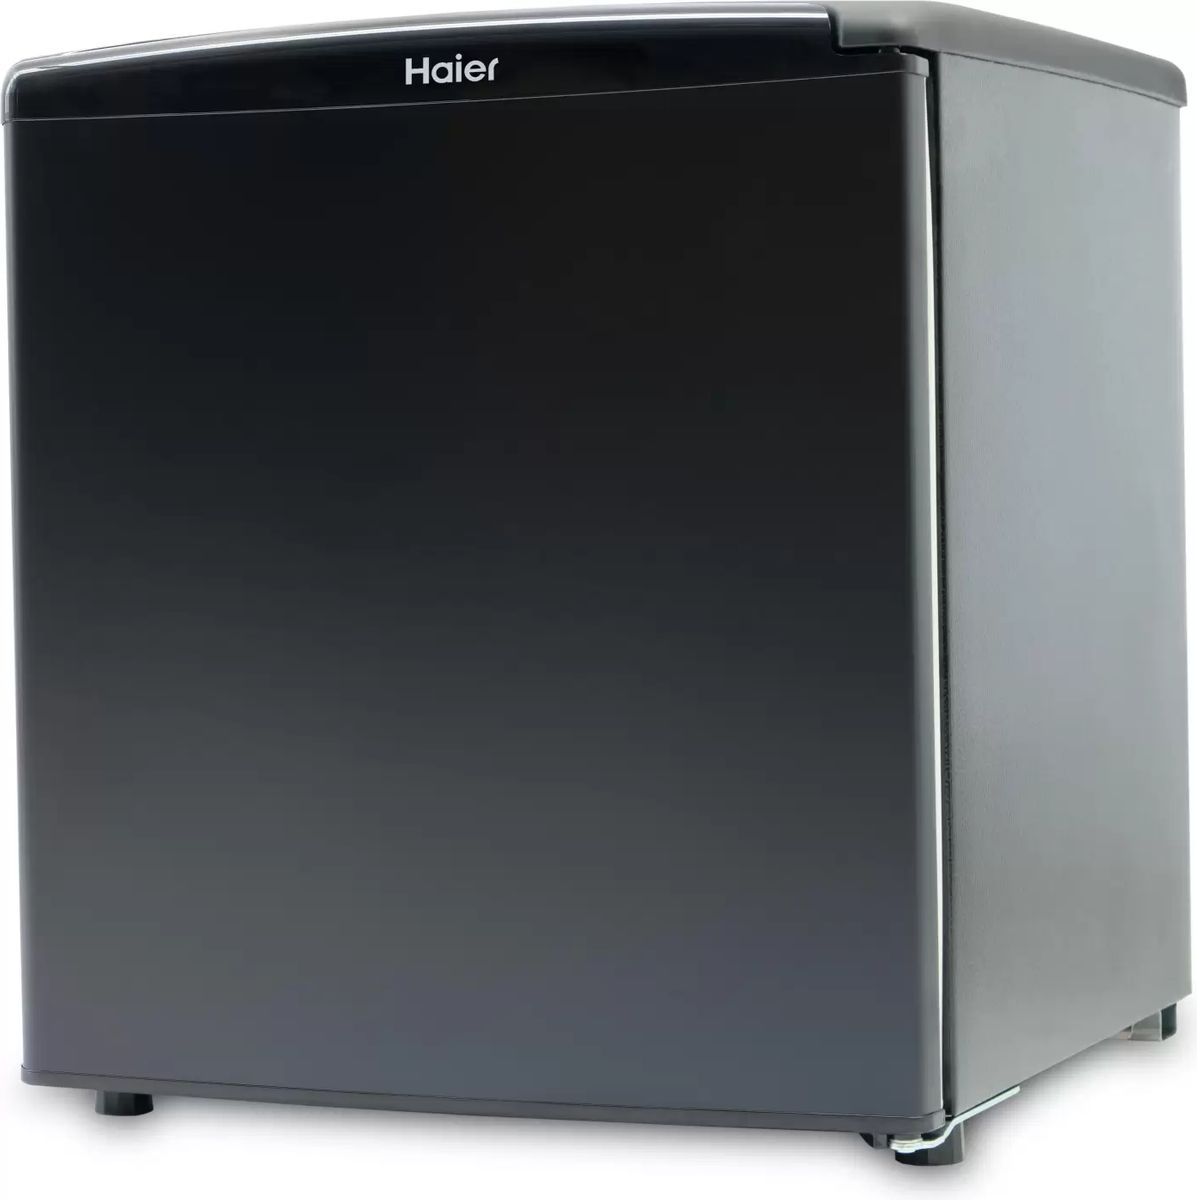 Haier HR65KS 53 L 2 Star Single Door Refrigerator Best Price in India 2021, Specs & Review